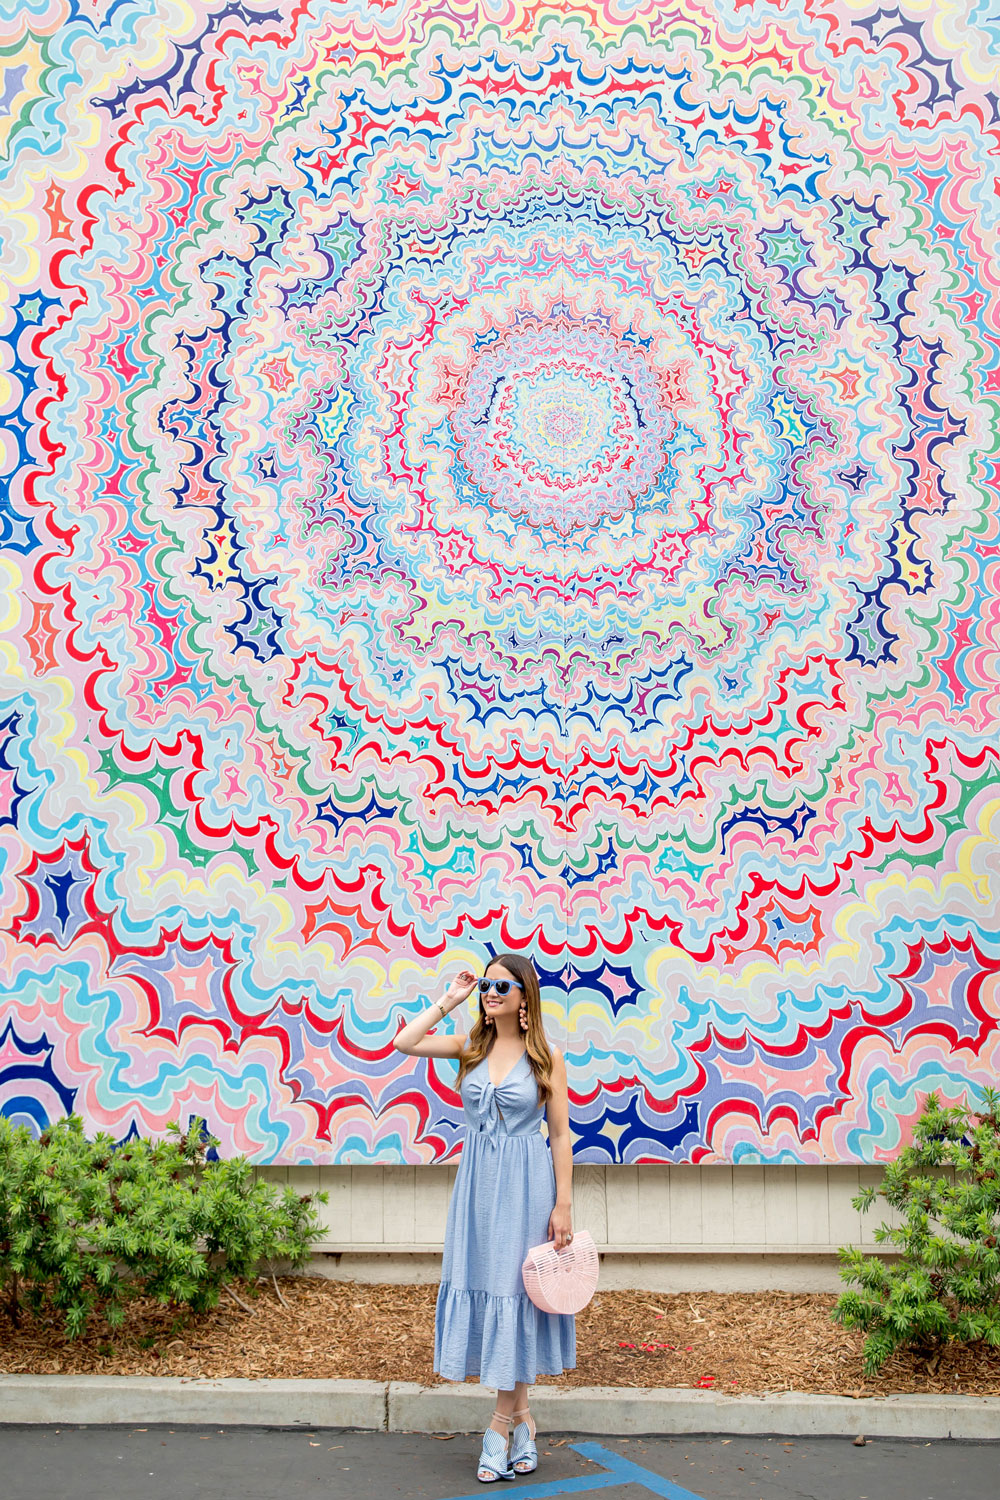 Kelsey Brookes Mural La Jolla